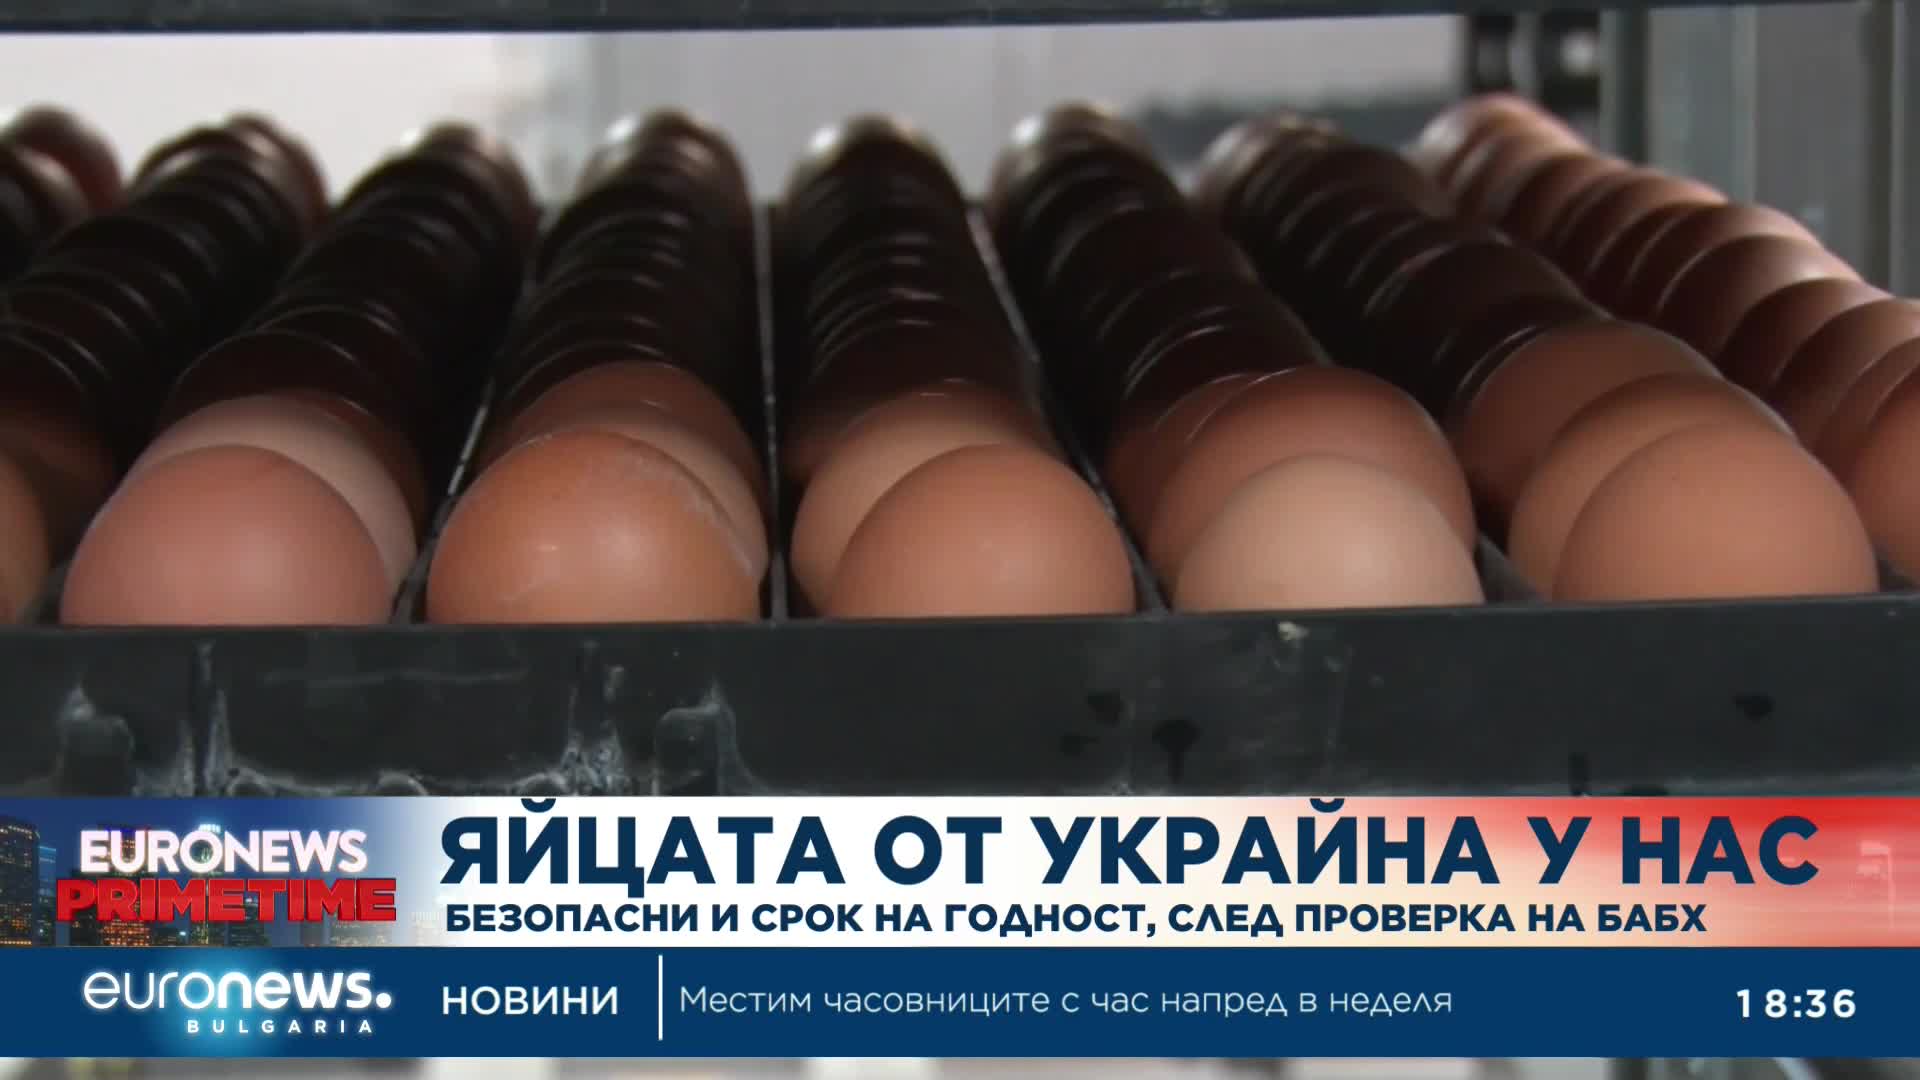 Украинските яйца са безопасни, установи проверка на БАБХ